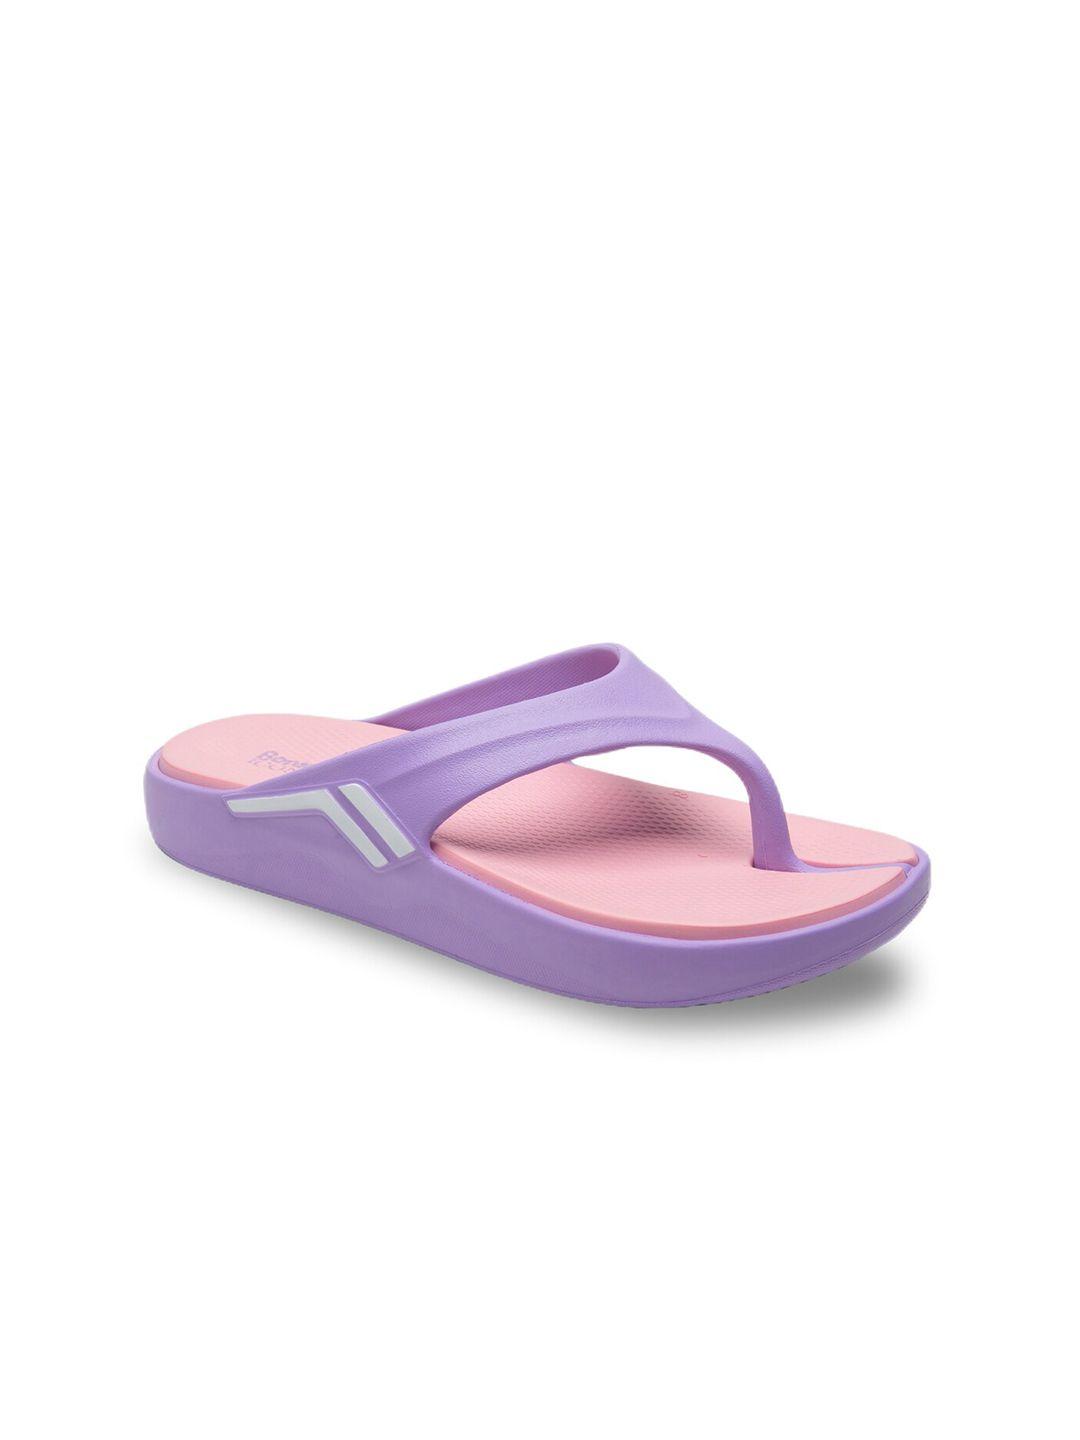 bonkerz-women-purple-&-pink-croslite-thong-flip-flops